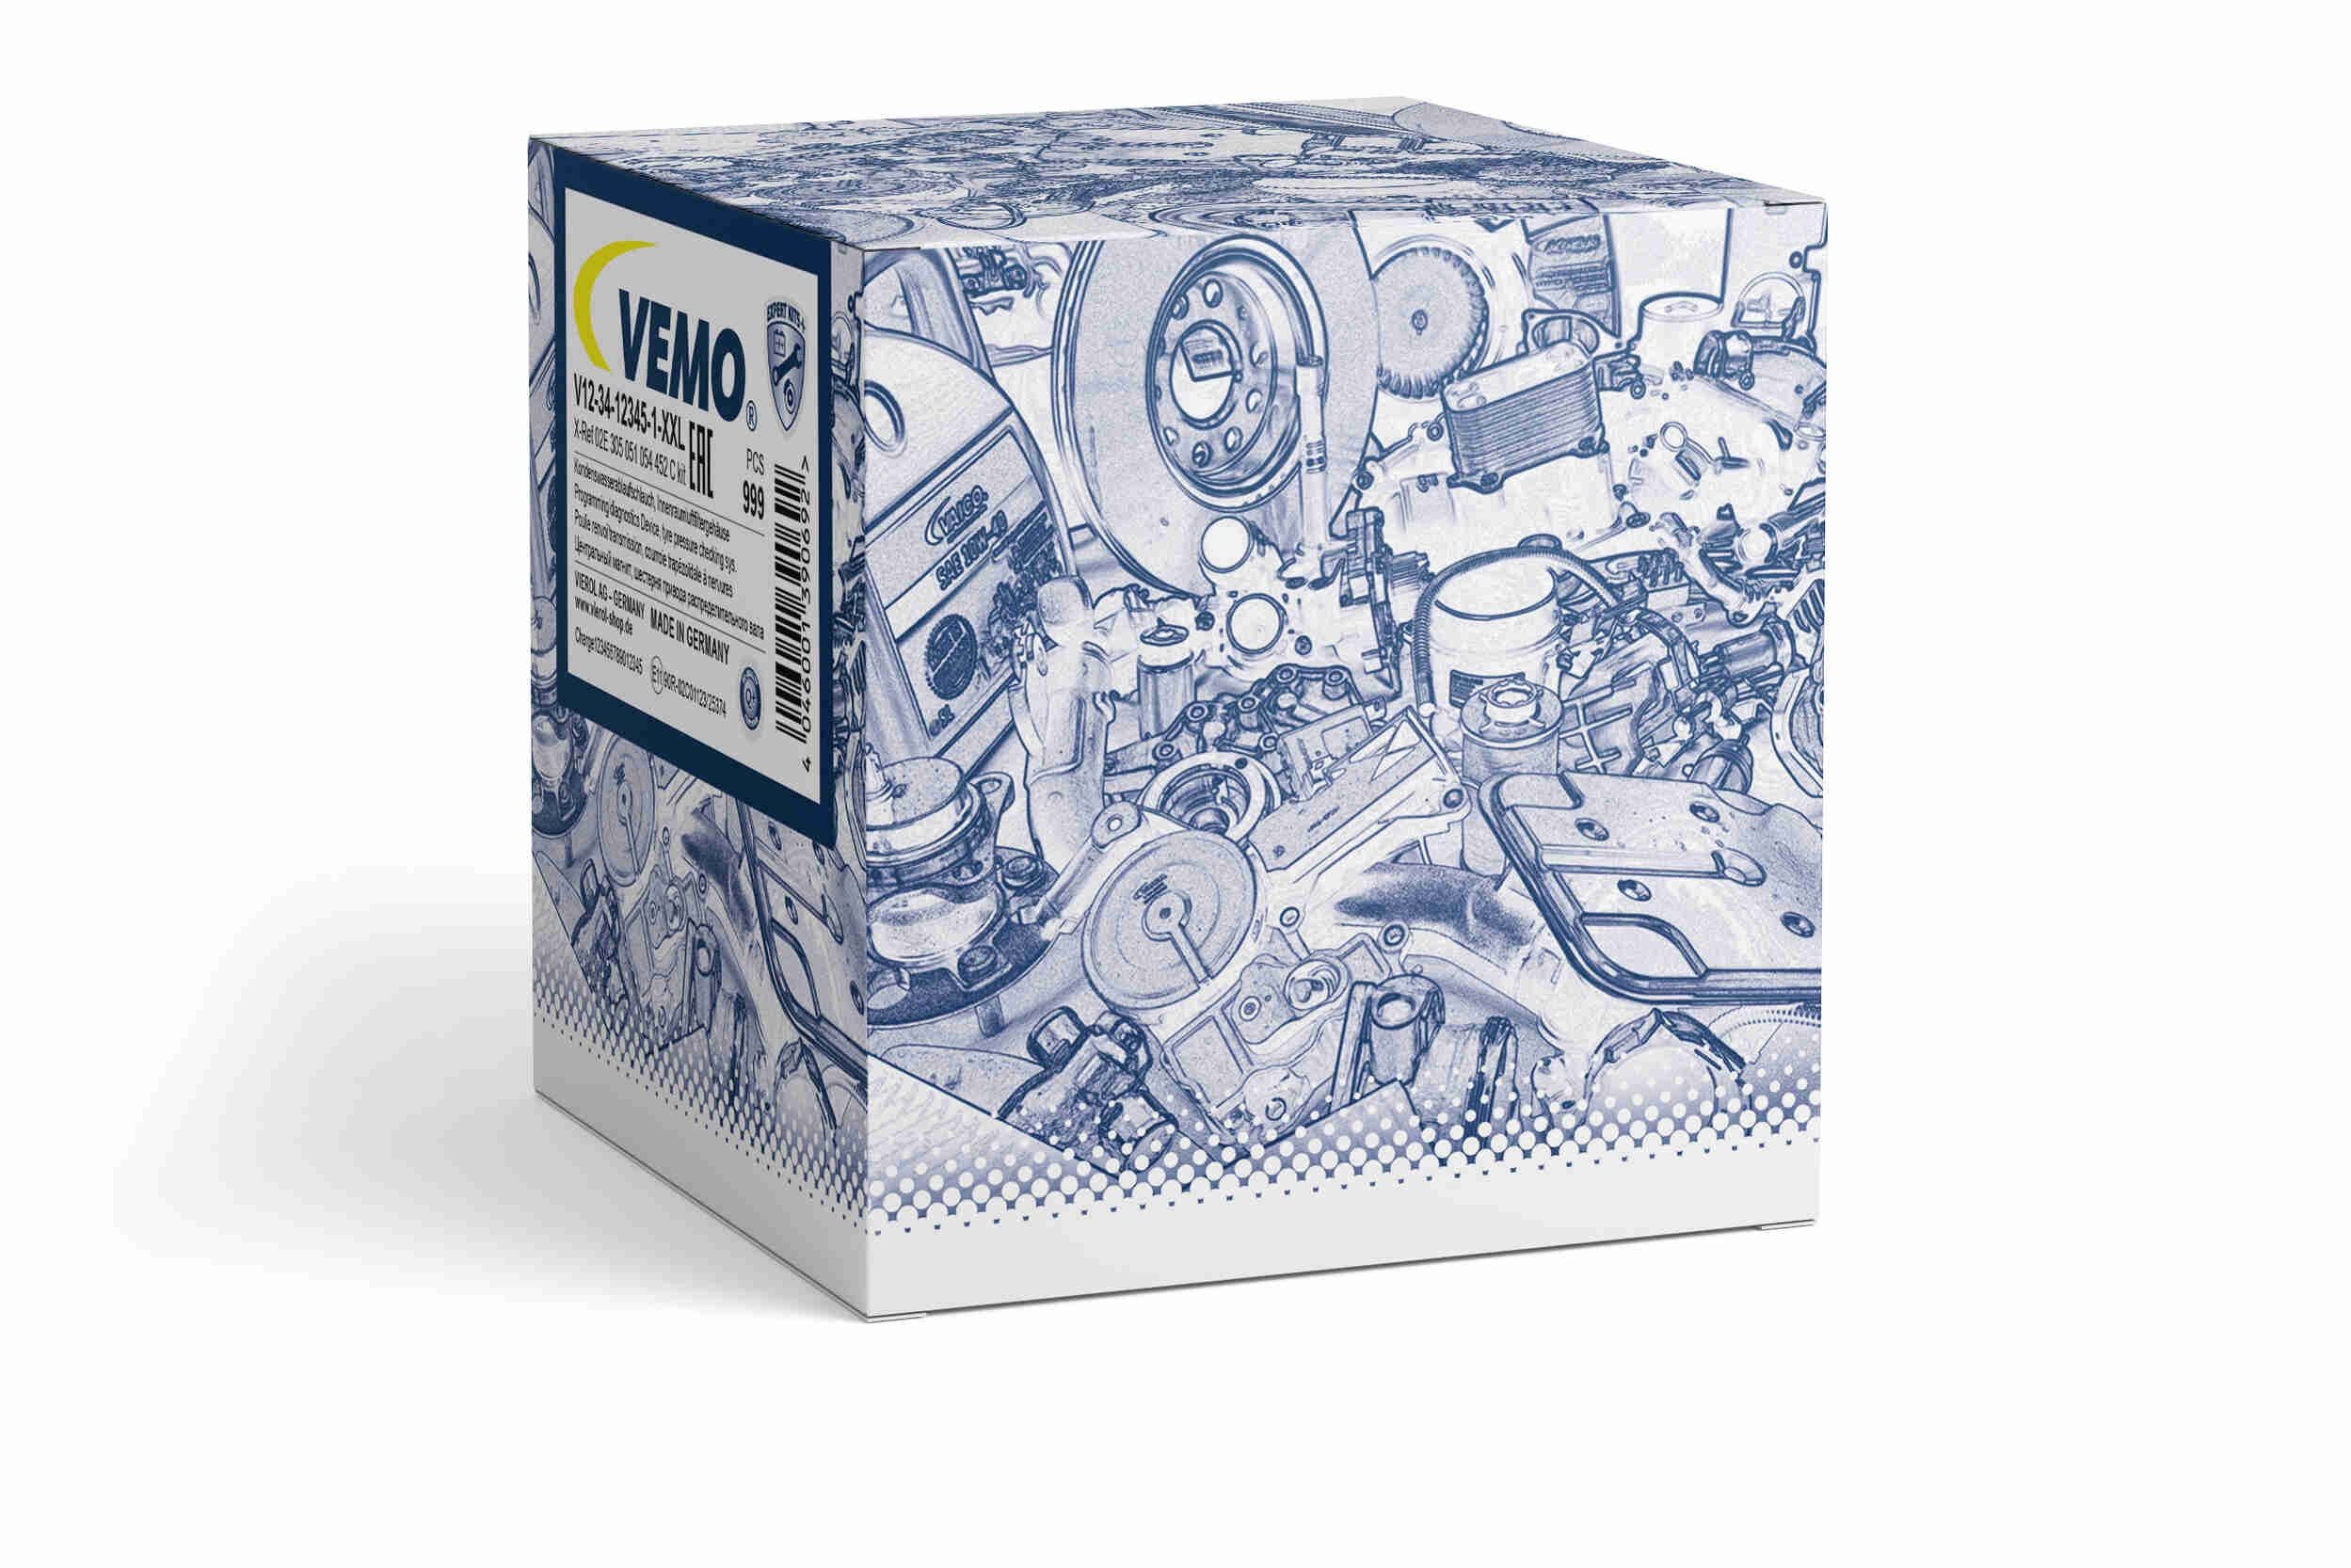 VEMO V25-72-1179 Fuel rail pressure sensor Q+, original equipment manufacturer quality MADE IN GERMANY